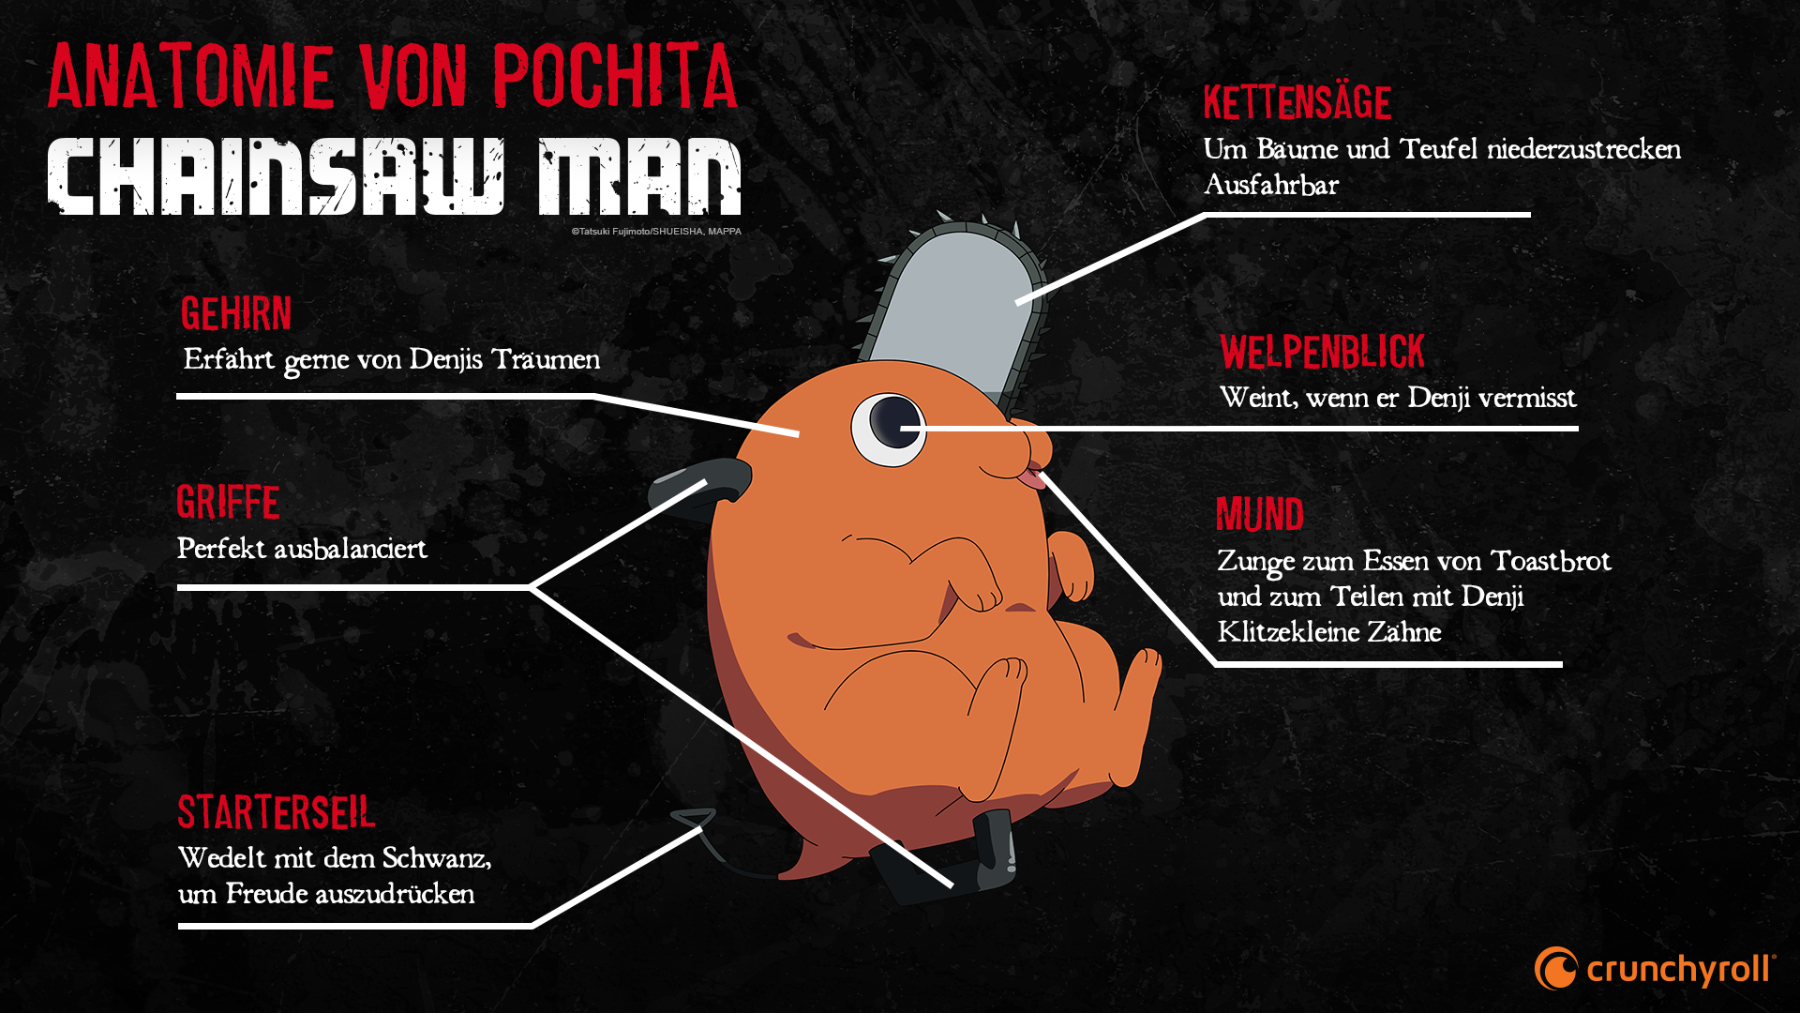 Pochita infographic